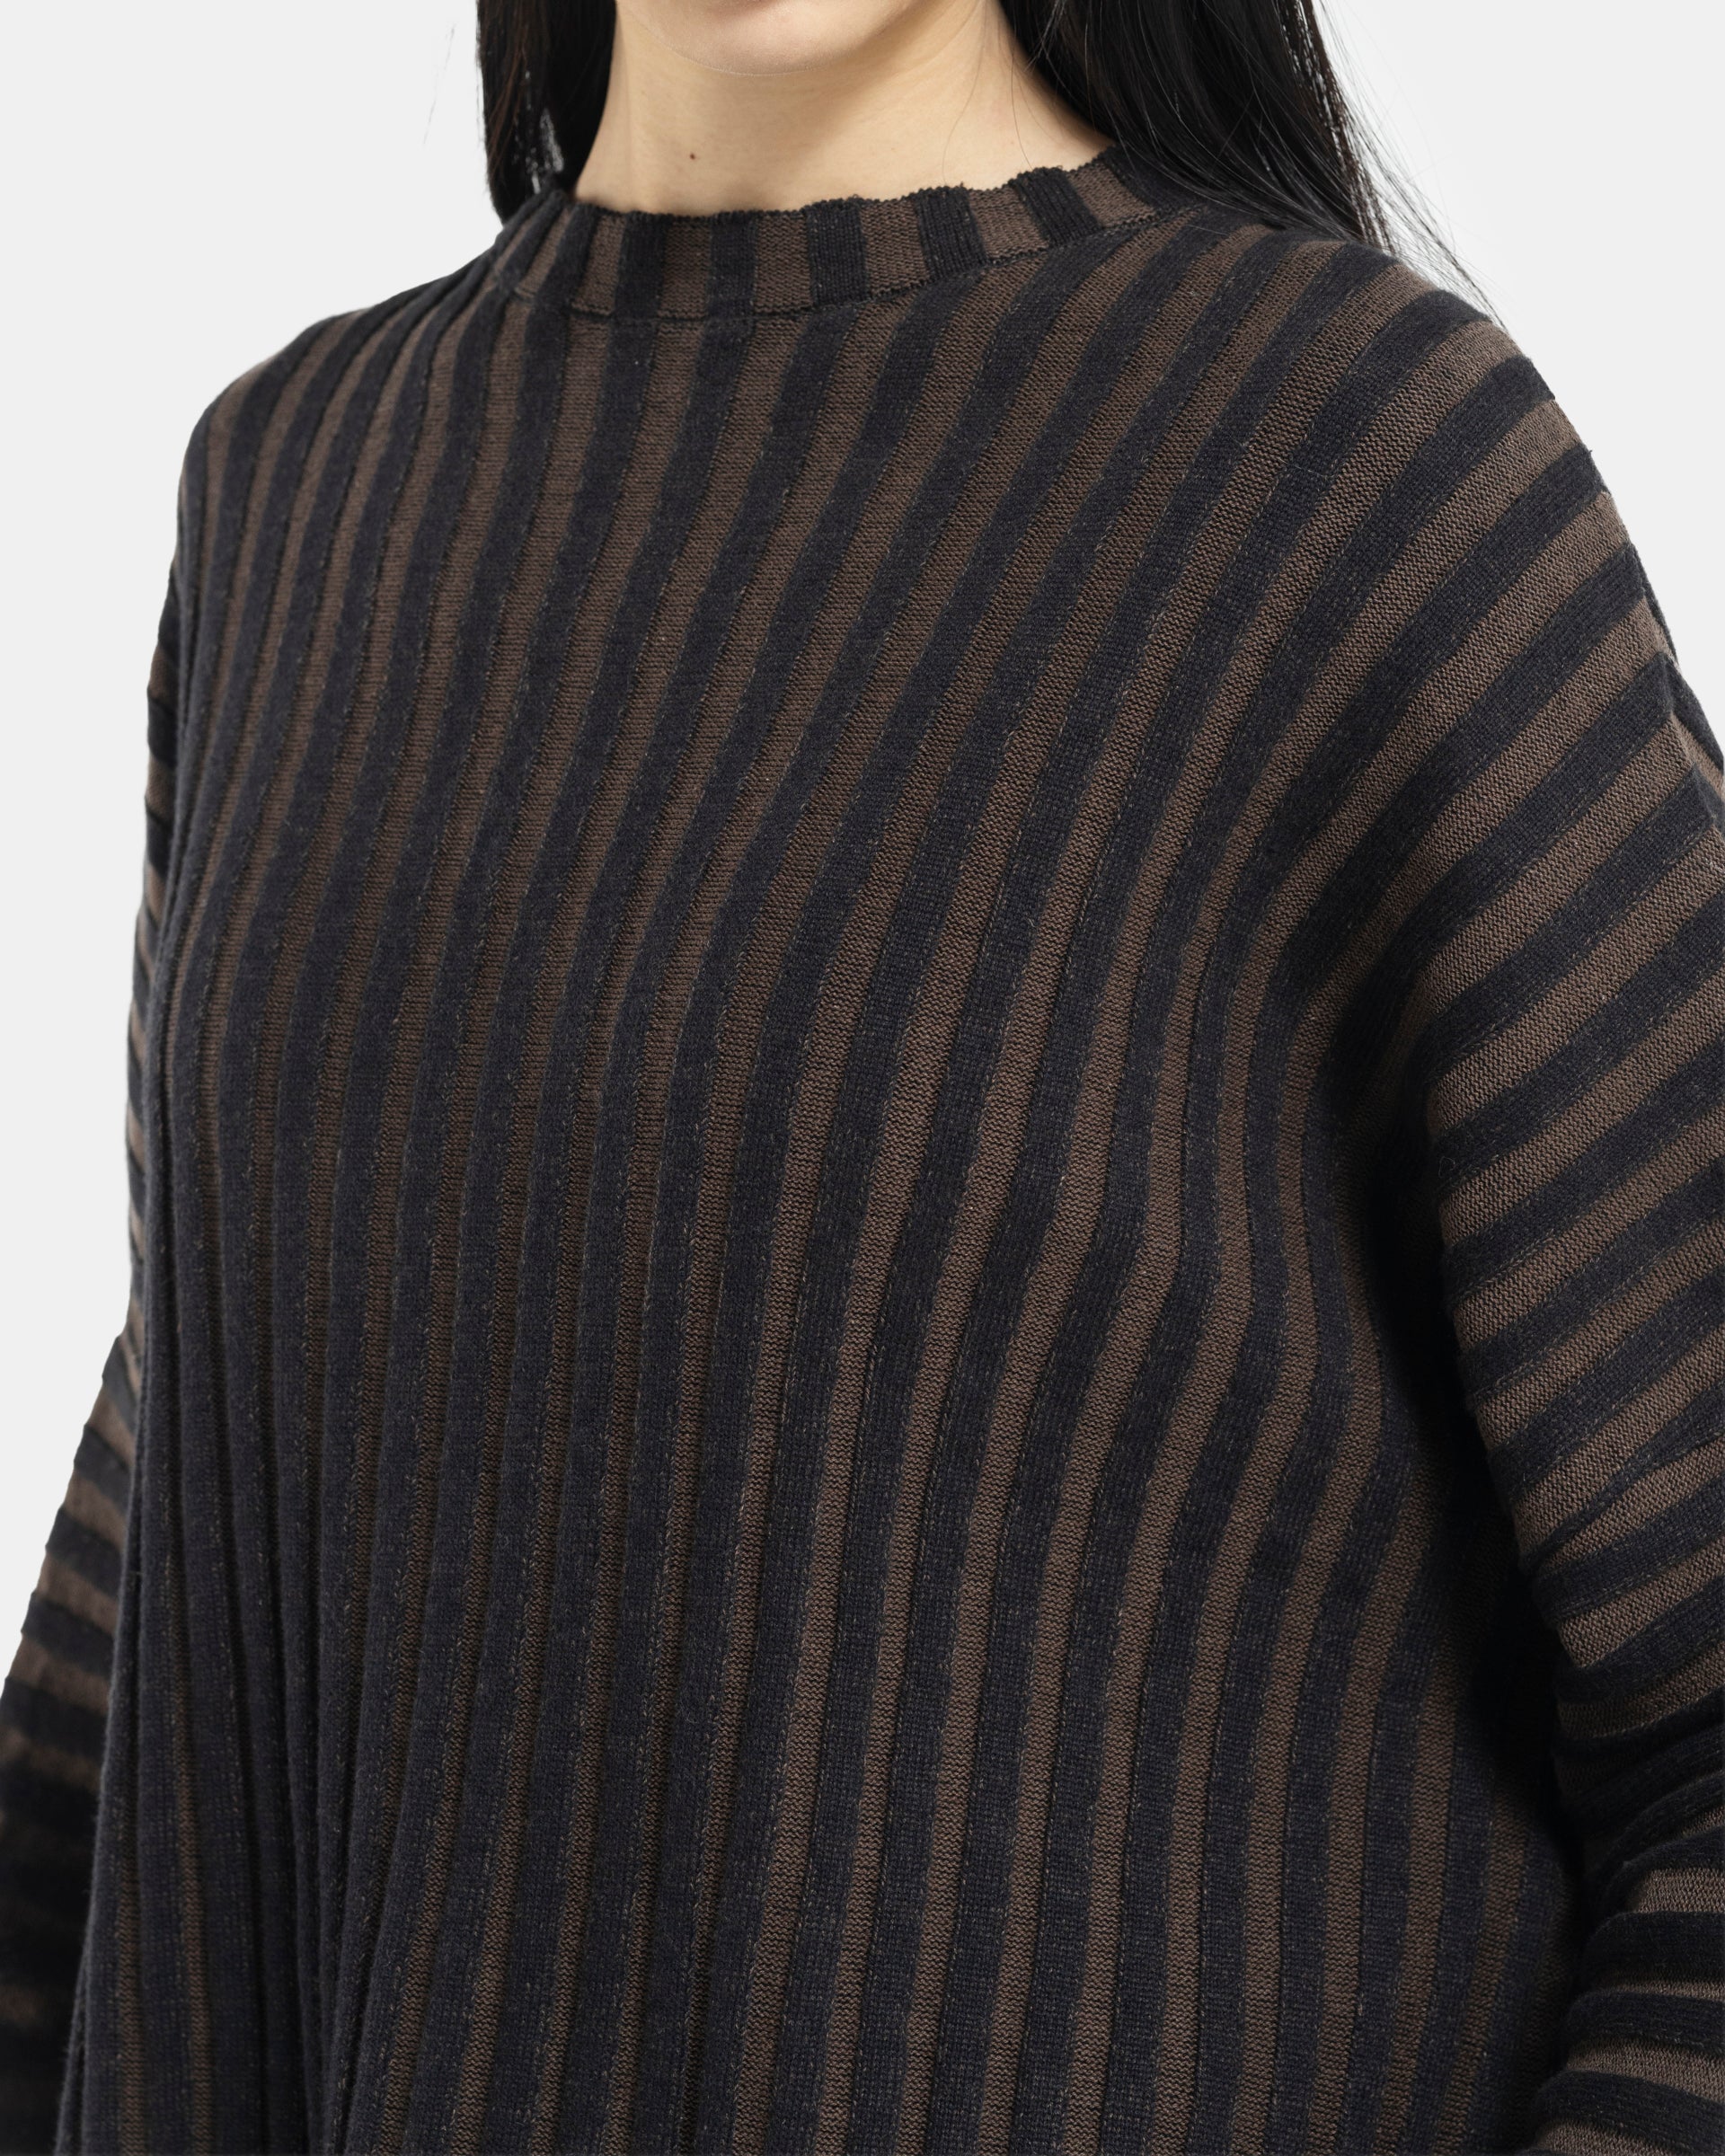  Eckhaus Latta Designer Wool Brown Sweater with knit stripes